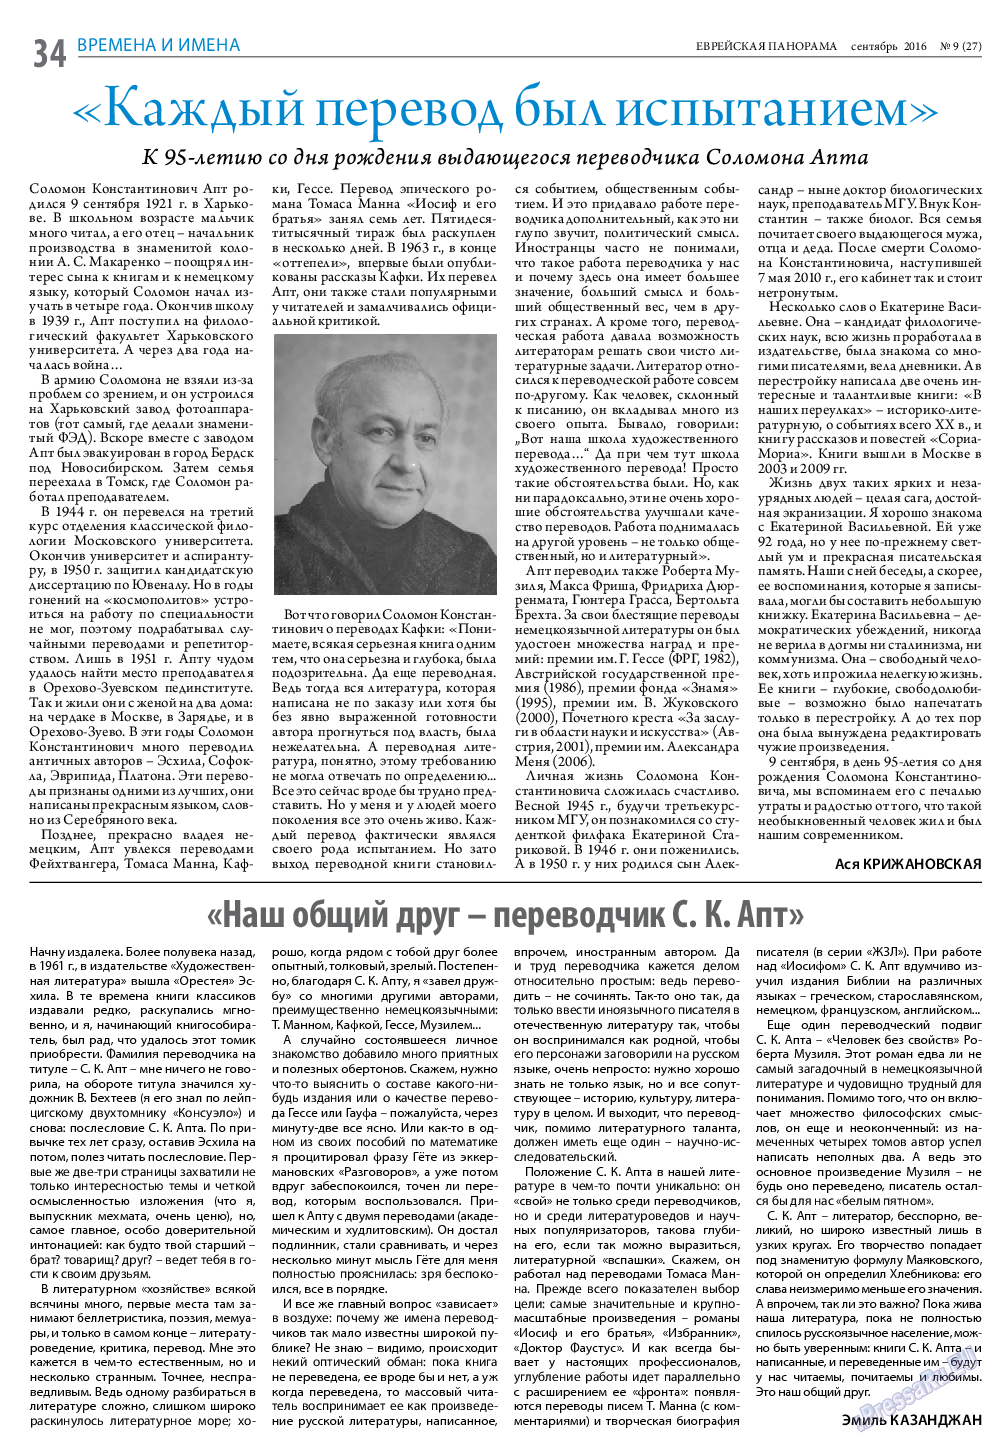 Еврейская панорама, газета. 2016 №9 стр.34